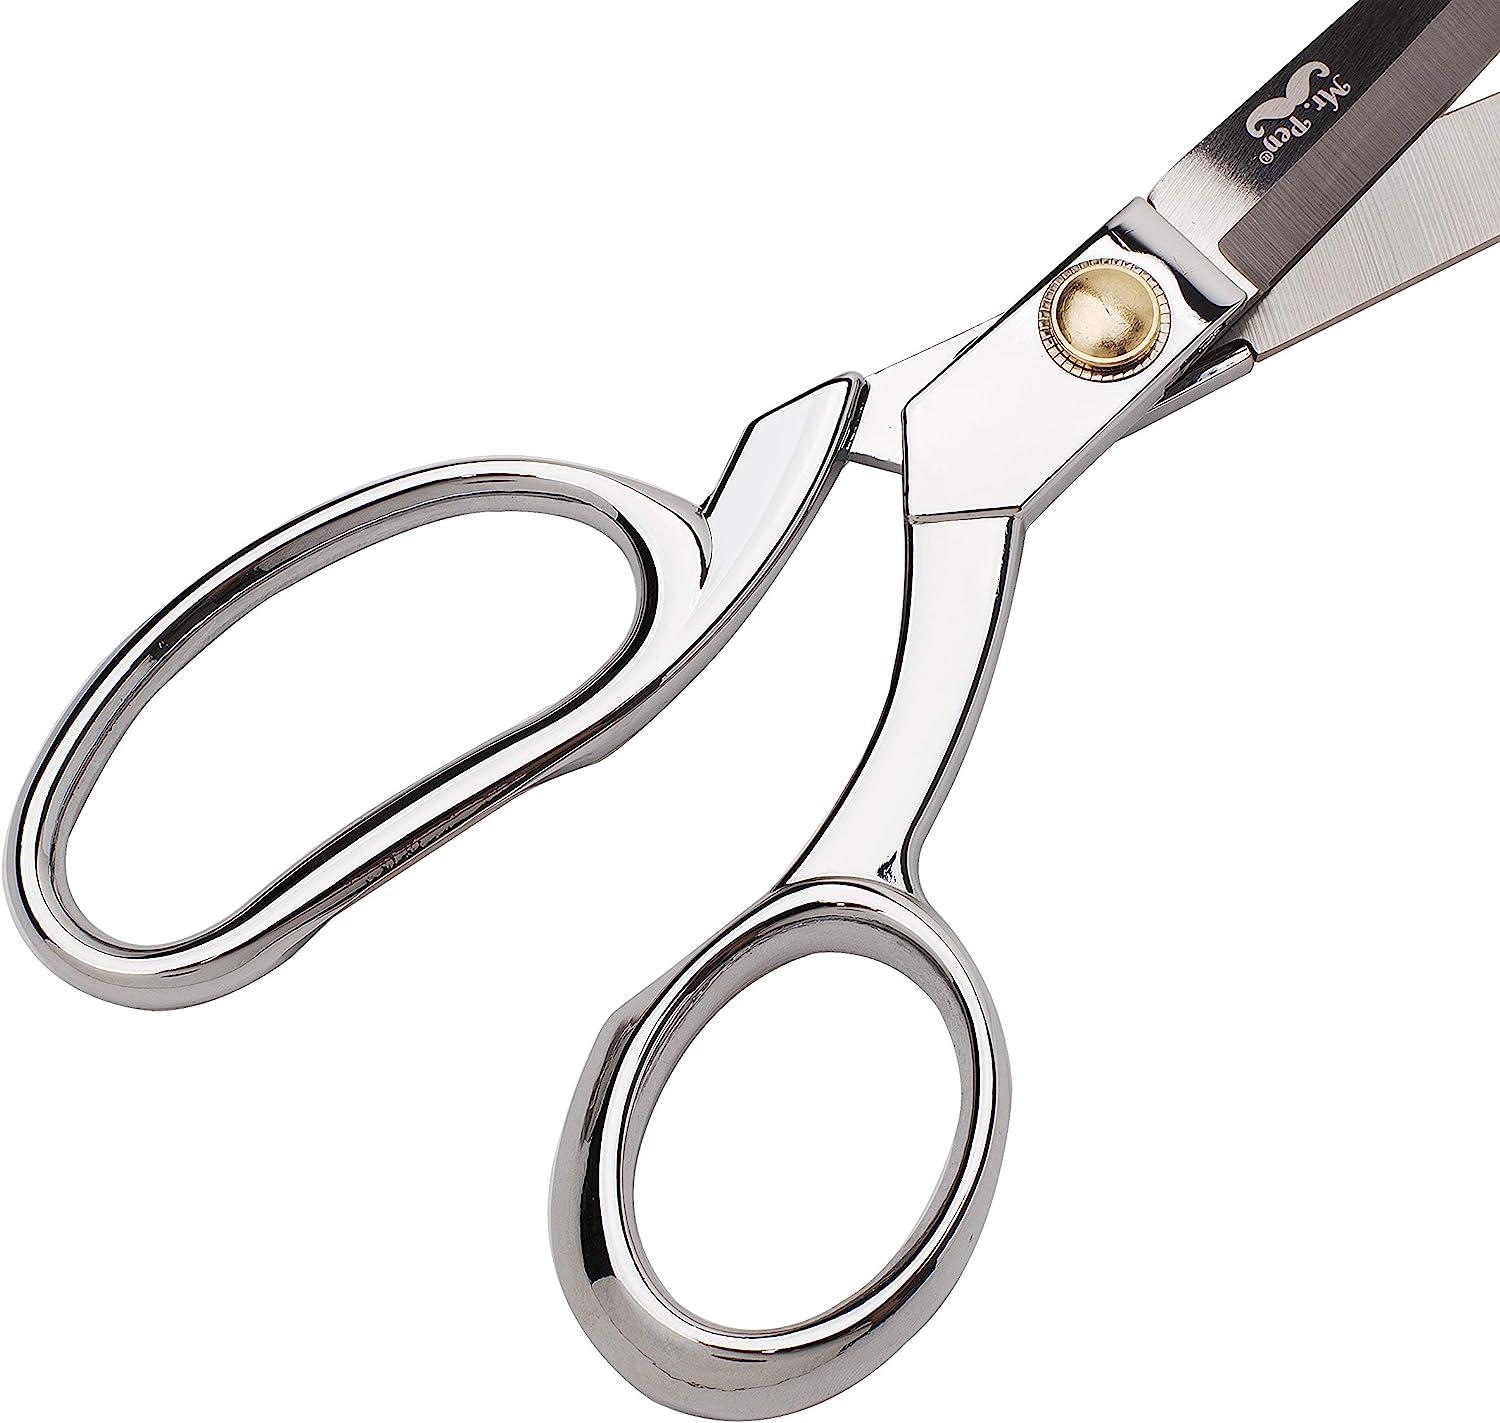 Mr. Pen- Multipurpose Scissors, 8 inch, Pack of 4, Scissor, Scissors for Office, Craft Scissors, Scissors Bulk, Office Scissors, Sharp Scissors, Paper